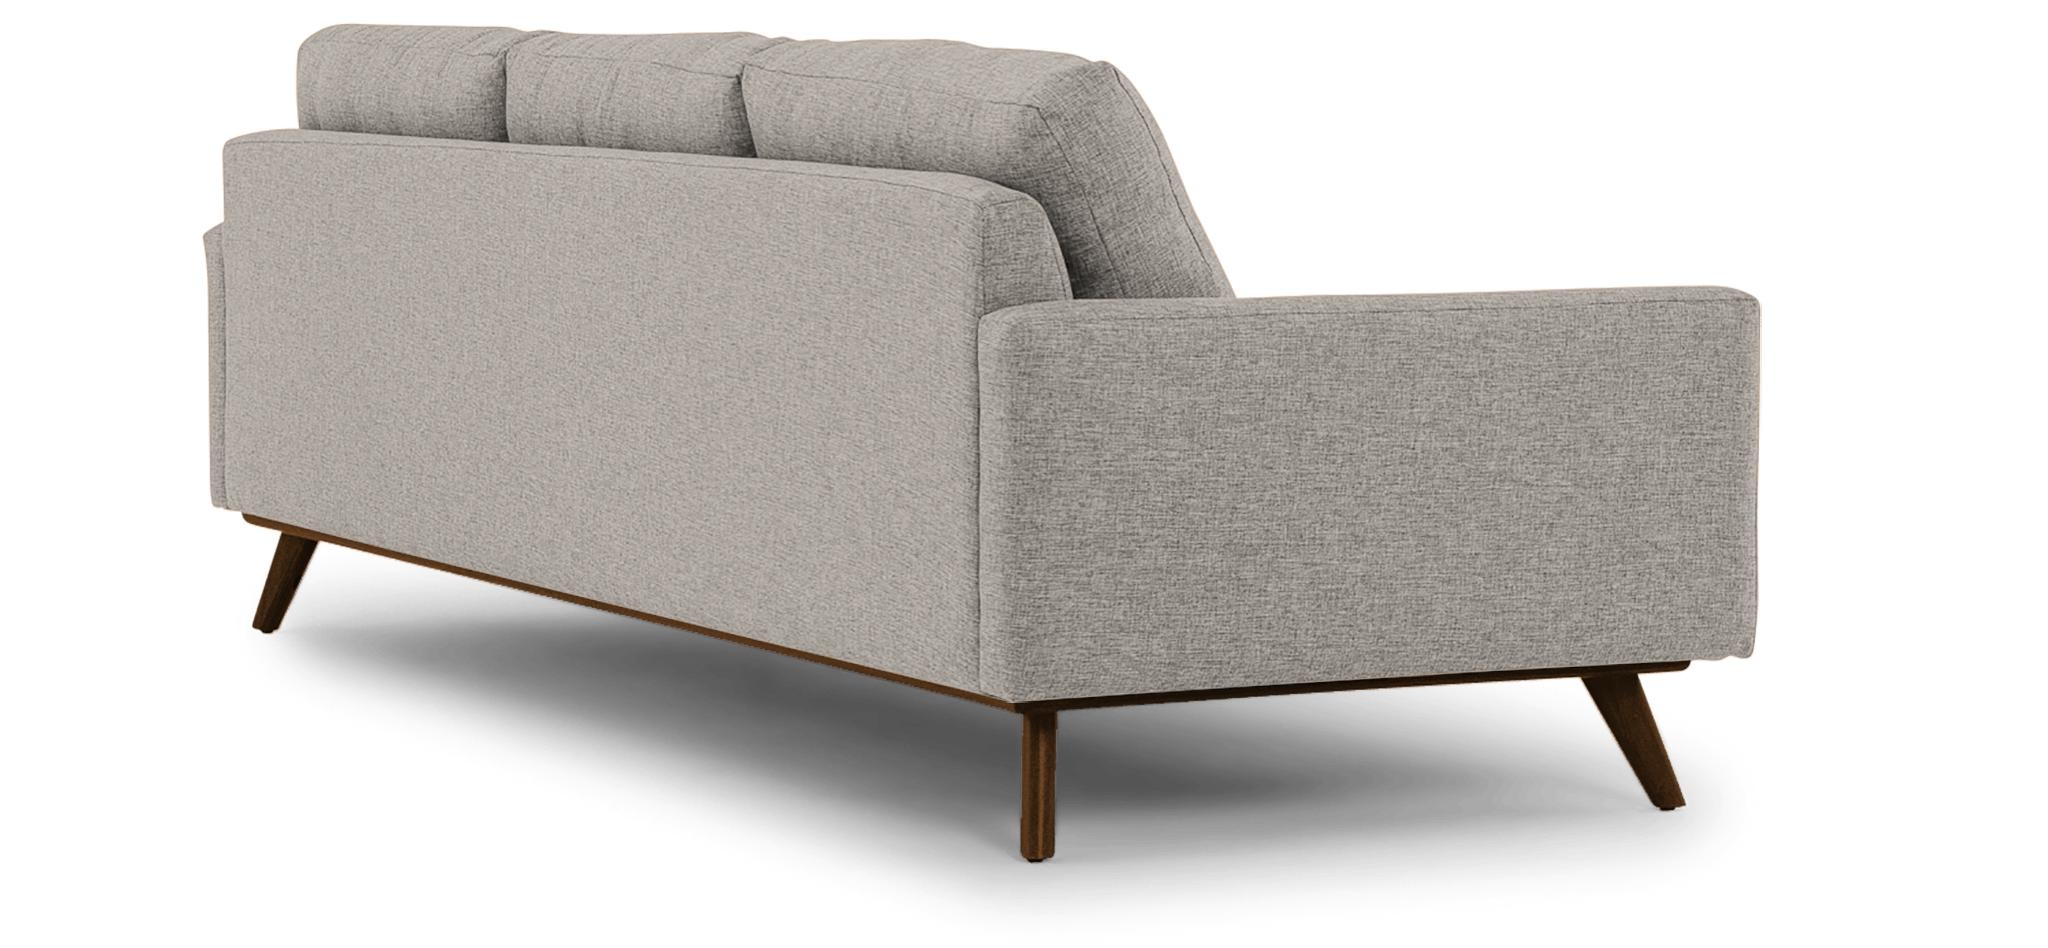 Gray Hopson Mid Century Modern Grand Sofa - Prime Stone - Mocha - Image 3